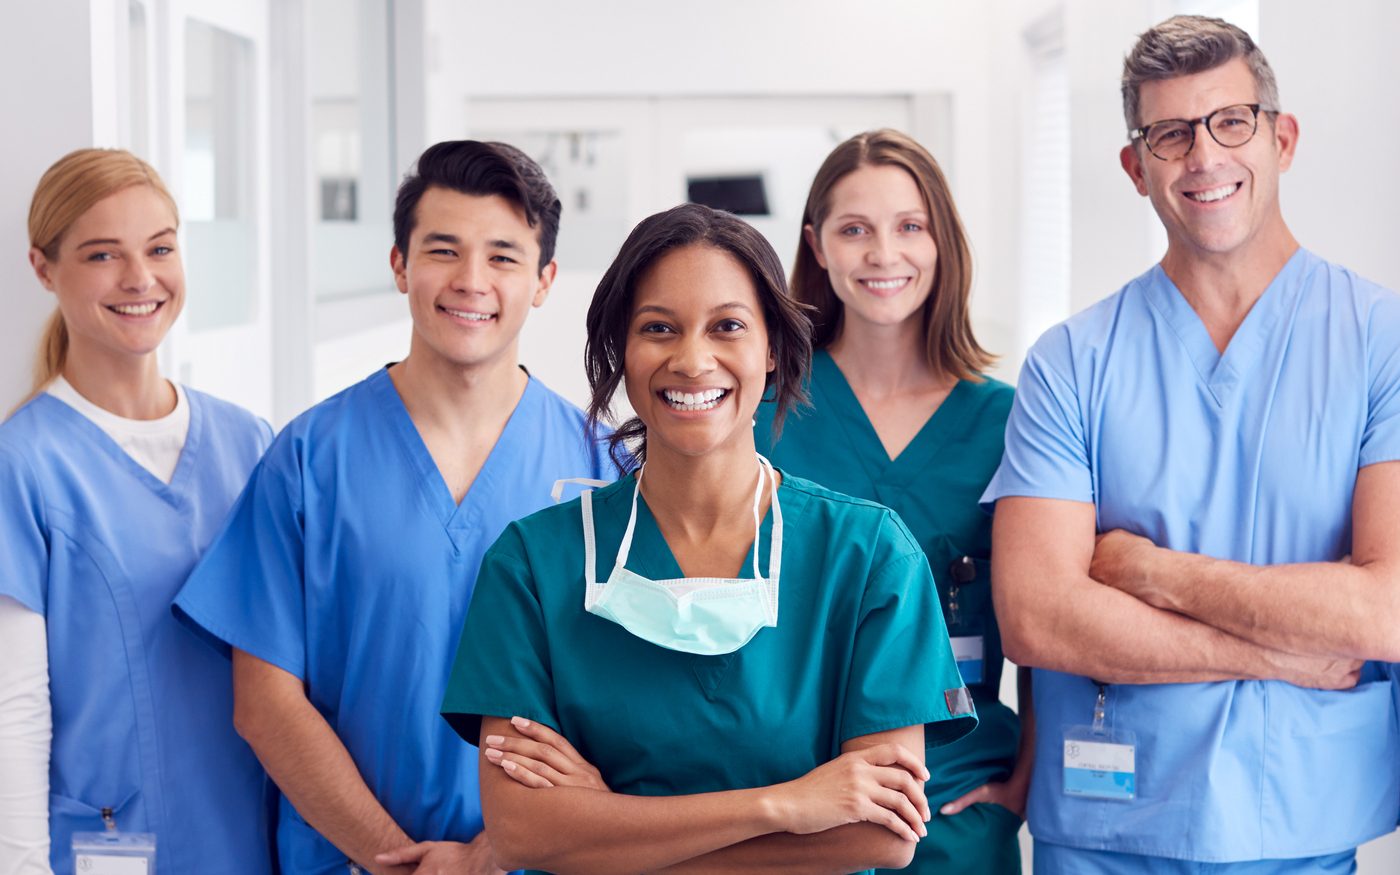 Portrait Of Smiling Multi-Cultural Medical Team Standing In Hospital Corridor